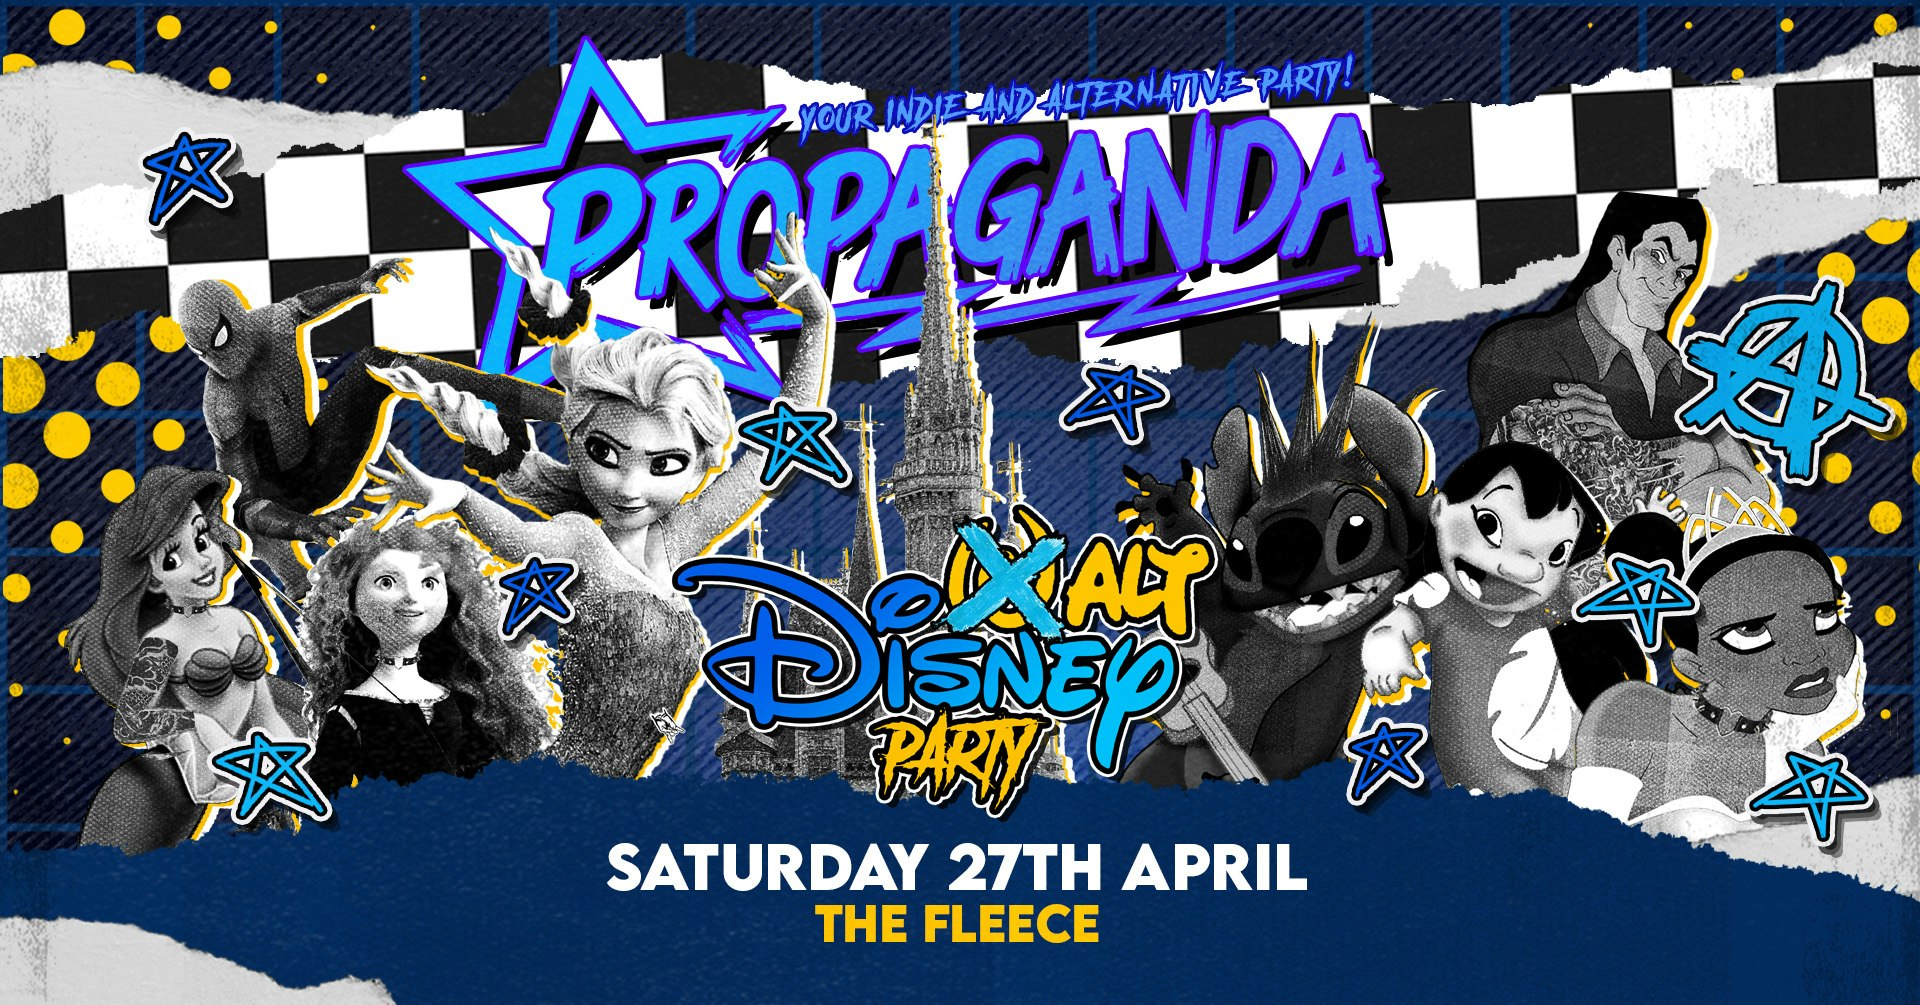 Propaganda Bristol – Alt Disney Party! – Your Indie & Alternative Party!